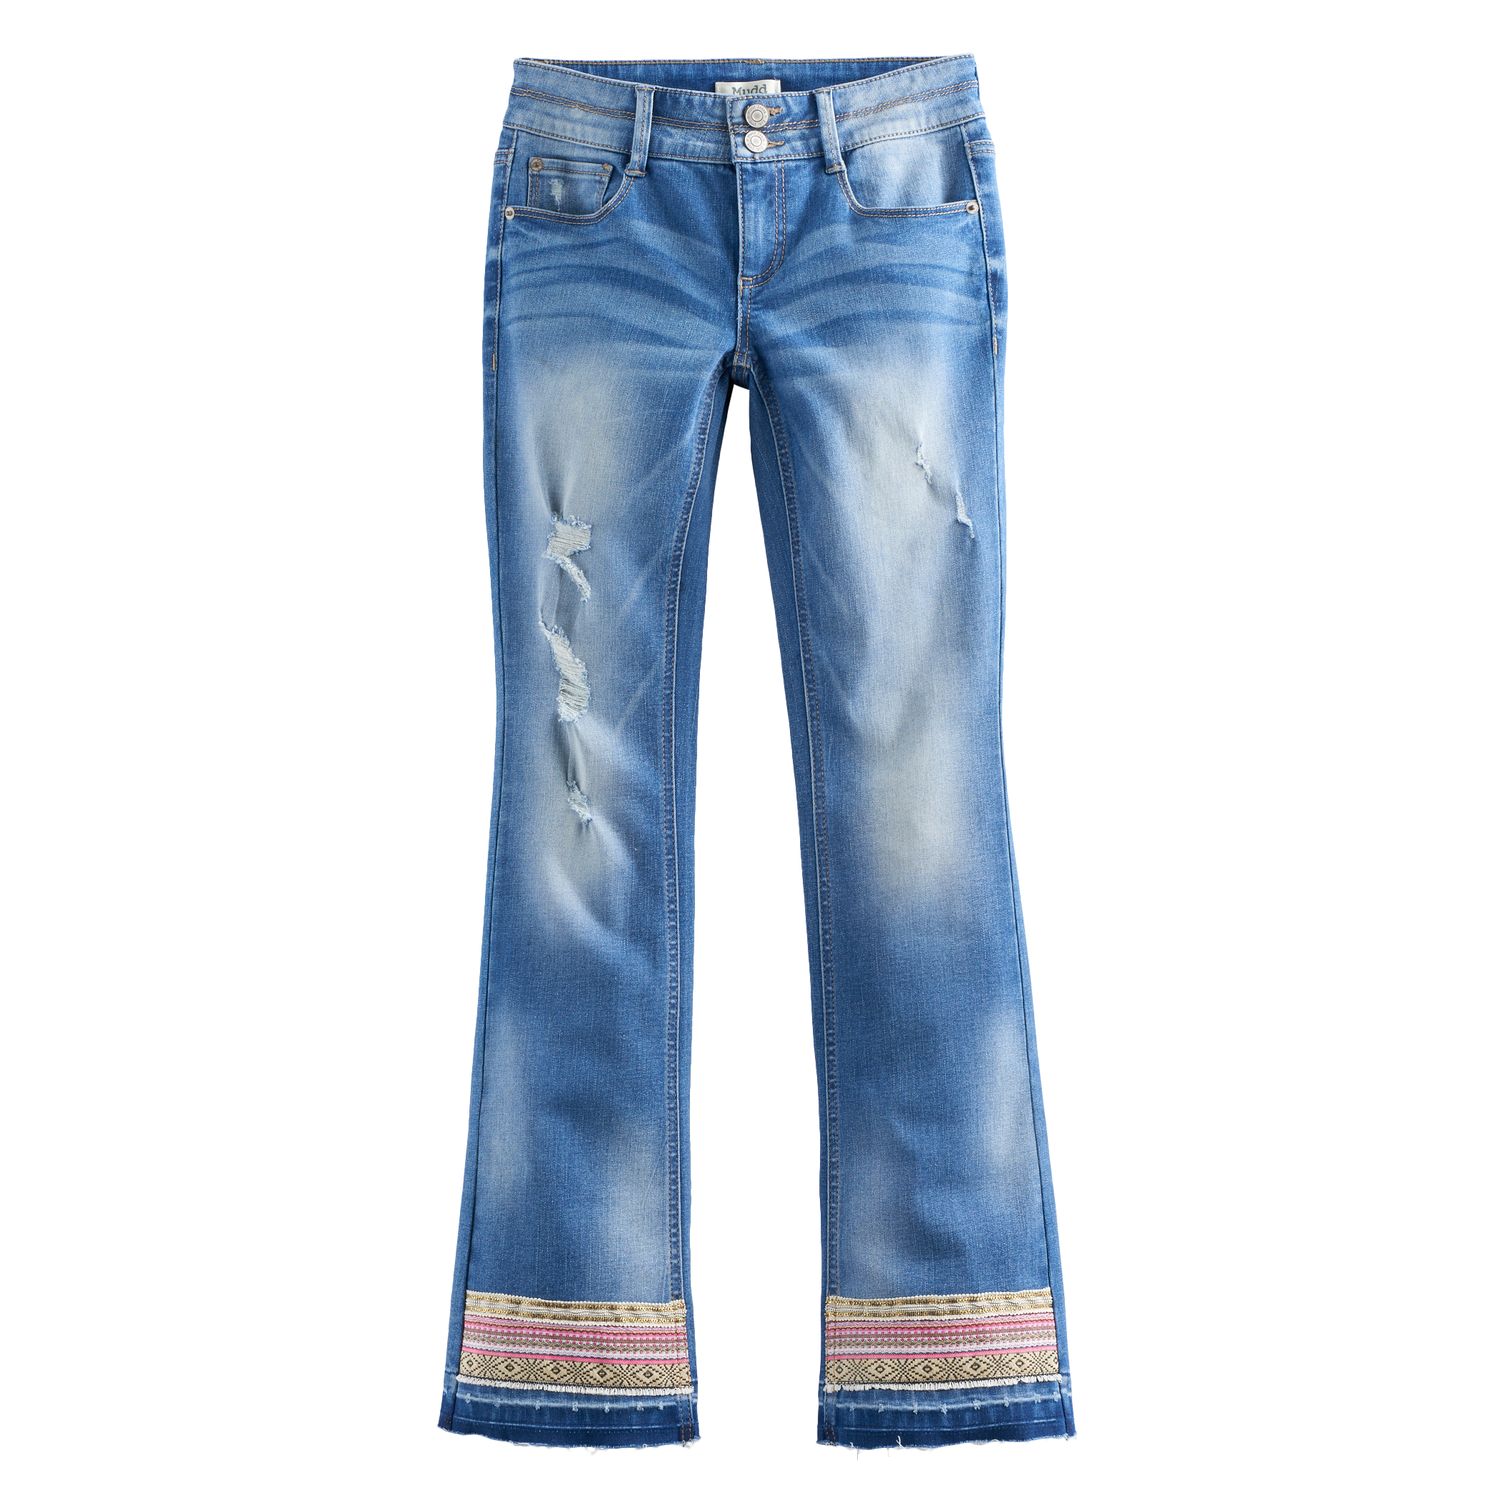 kohls embroidered jeans